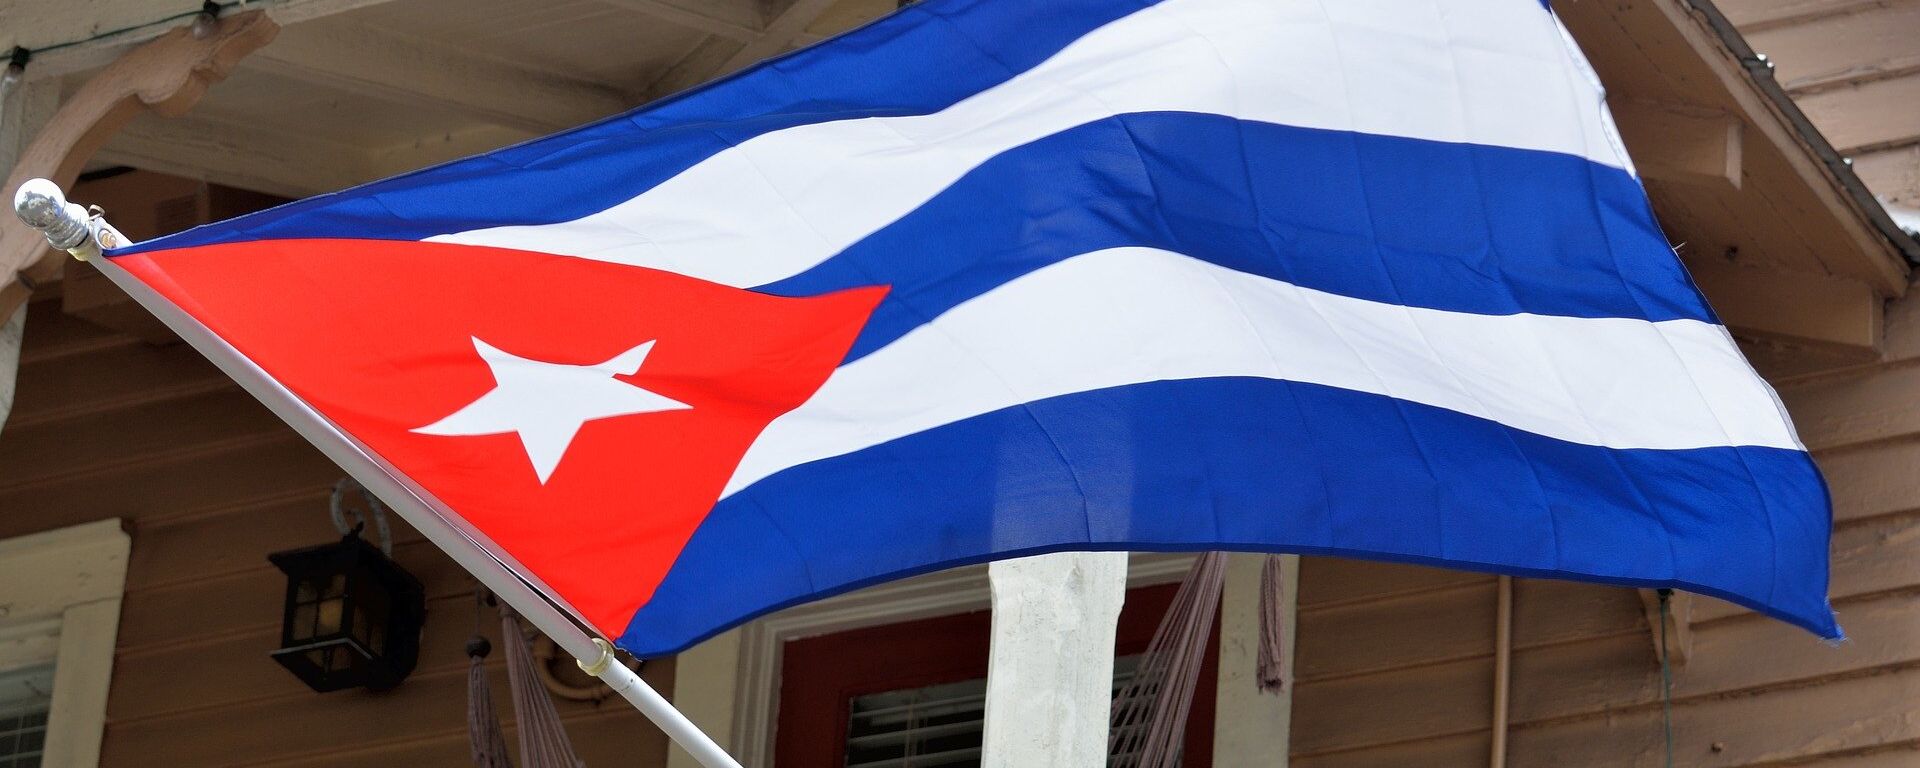 La bandera de Cuba - Sputnik Mundo, 1920, 30.08.2021